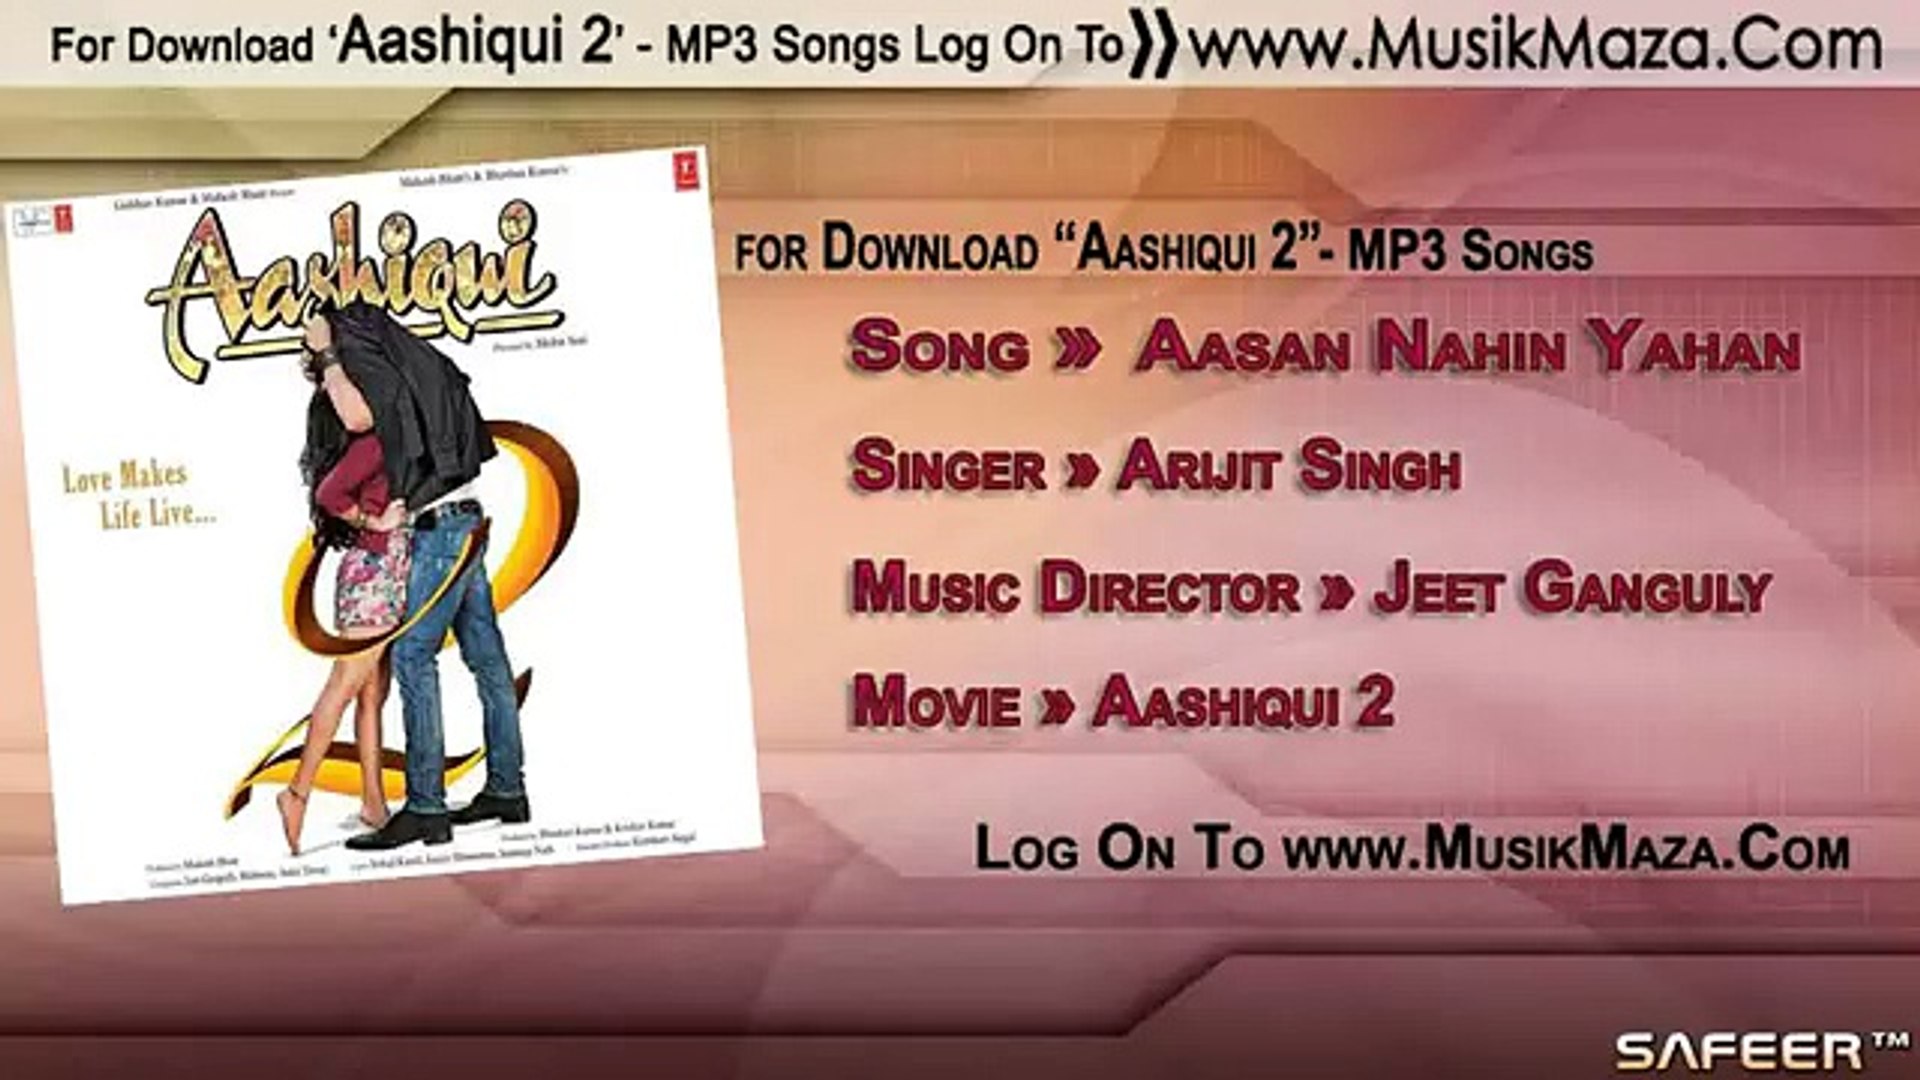 Aashiqui 2 - Asaan Nahin Yahan - Arijit Singh - Full Song ᴴᴰ 2013 - video  Dailymotion